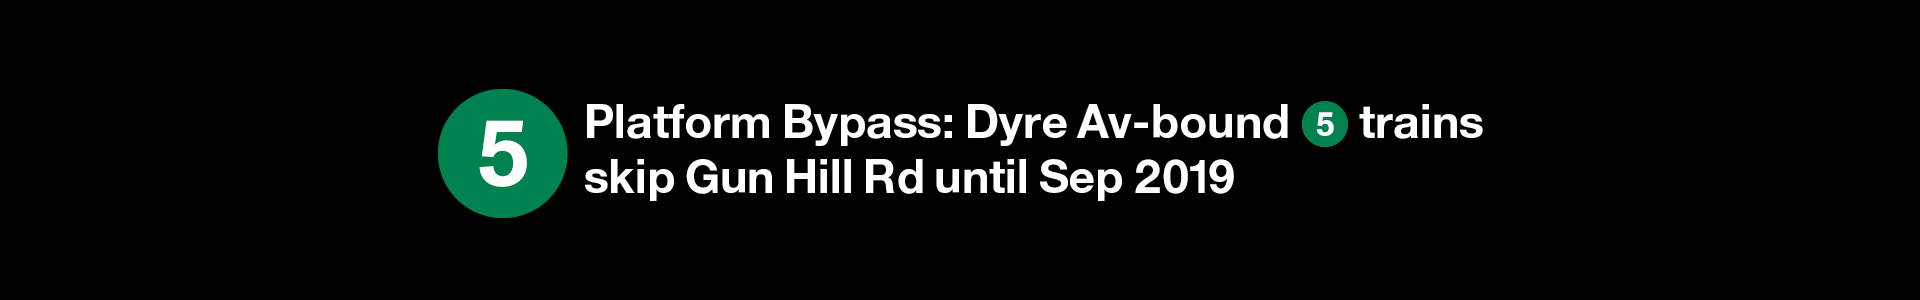 Dyre Avenue-bound 5 trains skip Gun Hill Road until September 2019